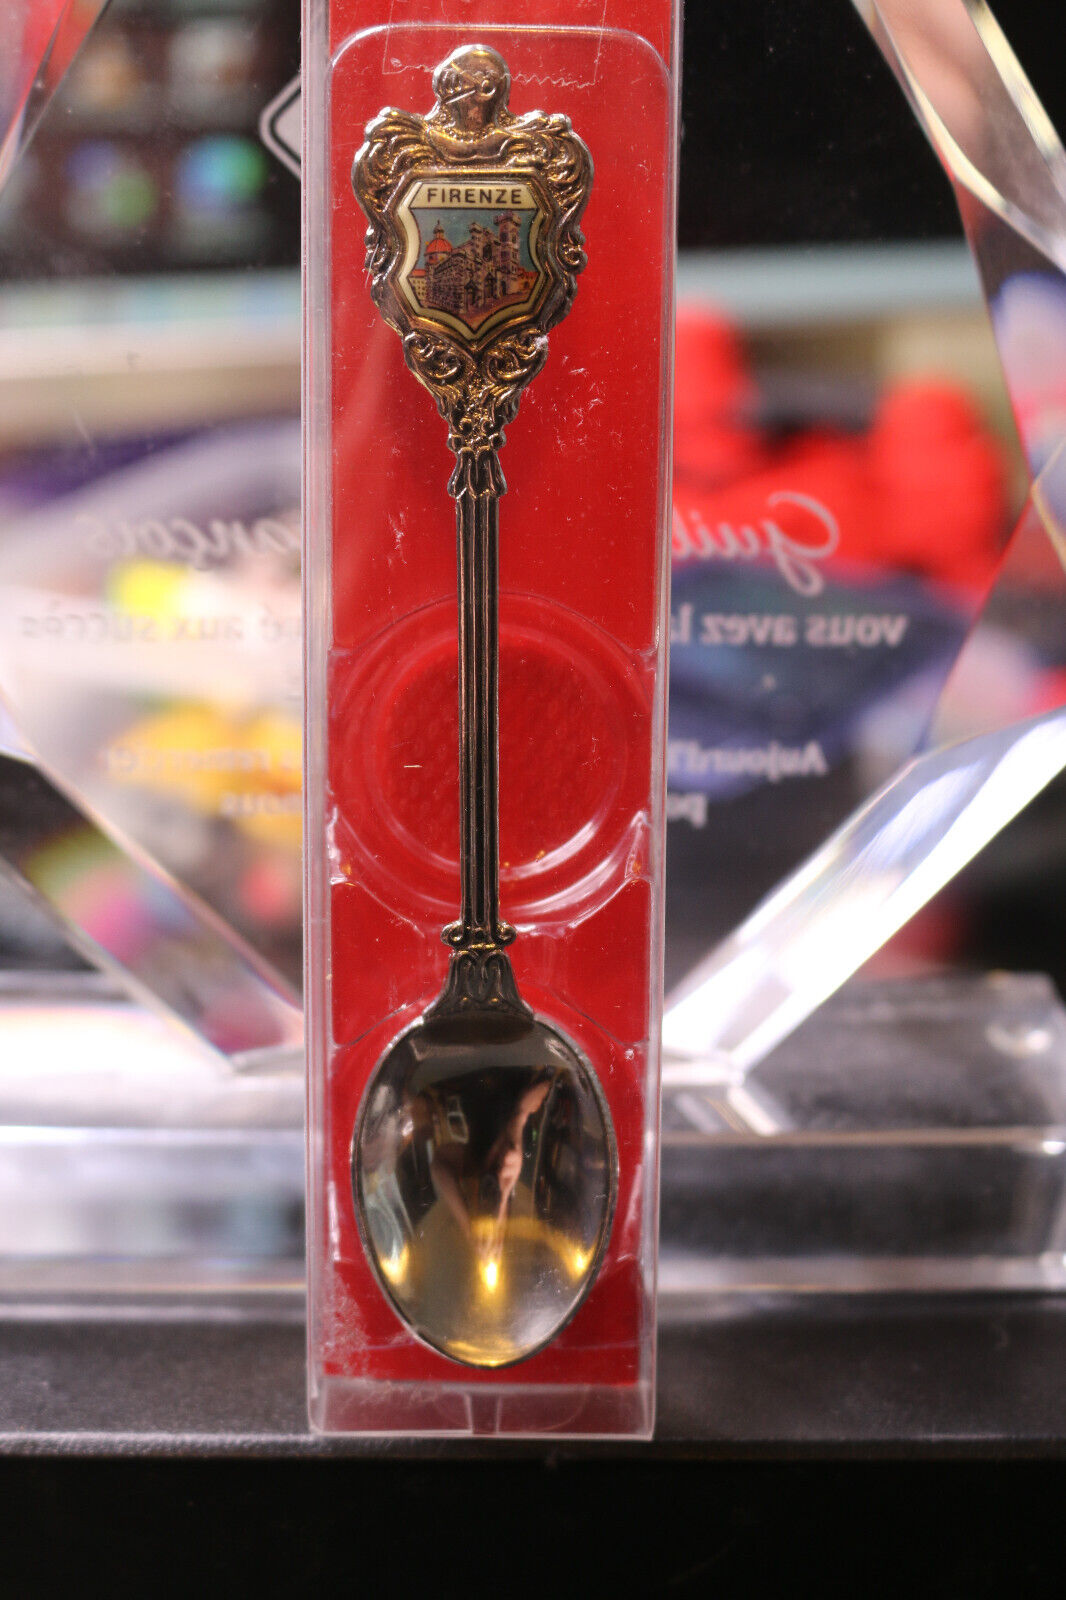 Firenze Collectors Vintage Spoon Souvenir Collectible